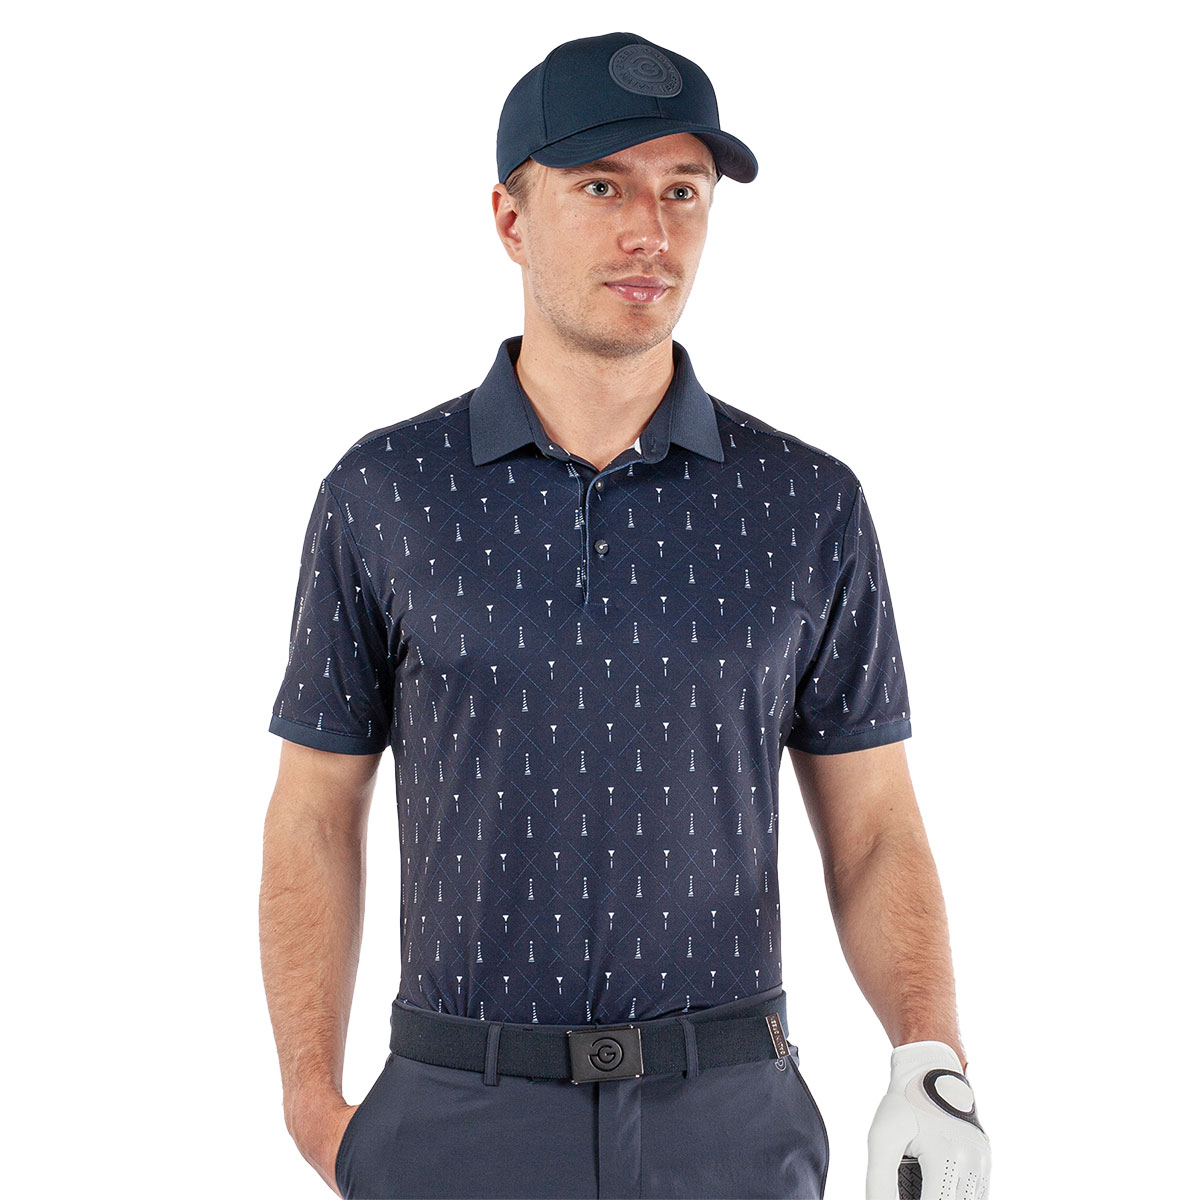 Galvin Green Men's Manolo Golf Polo Shirt from american golf